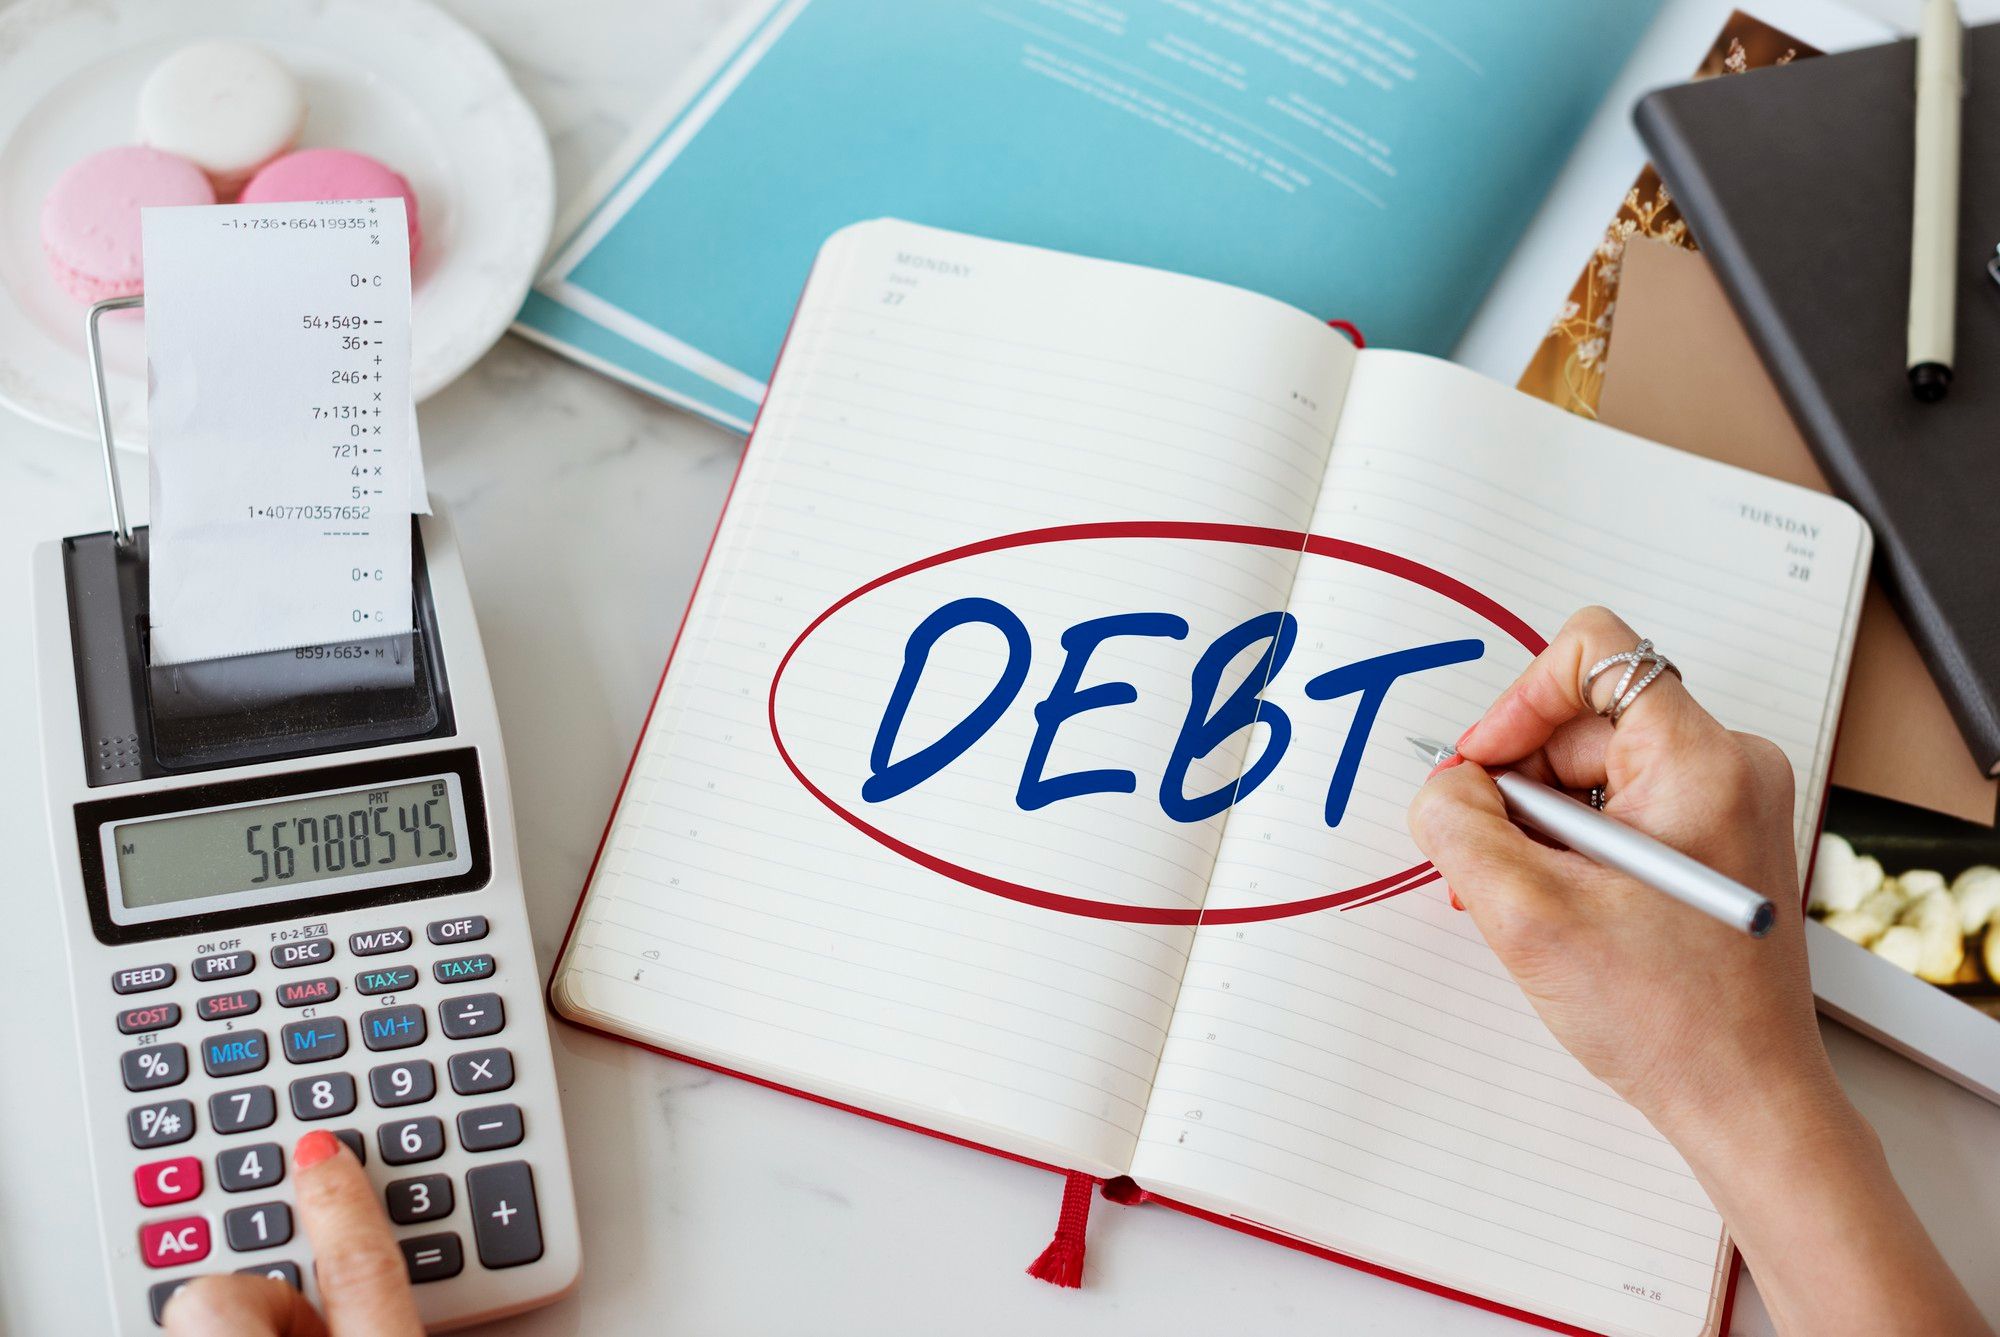 Understanding Debt Consolidation